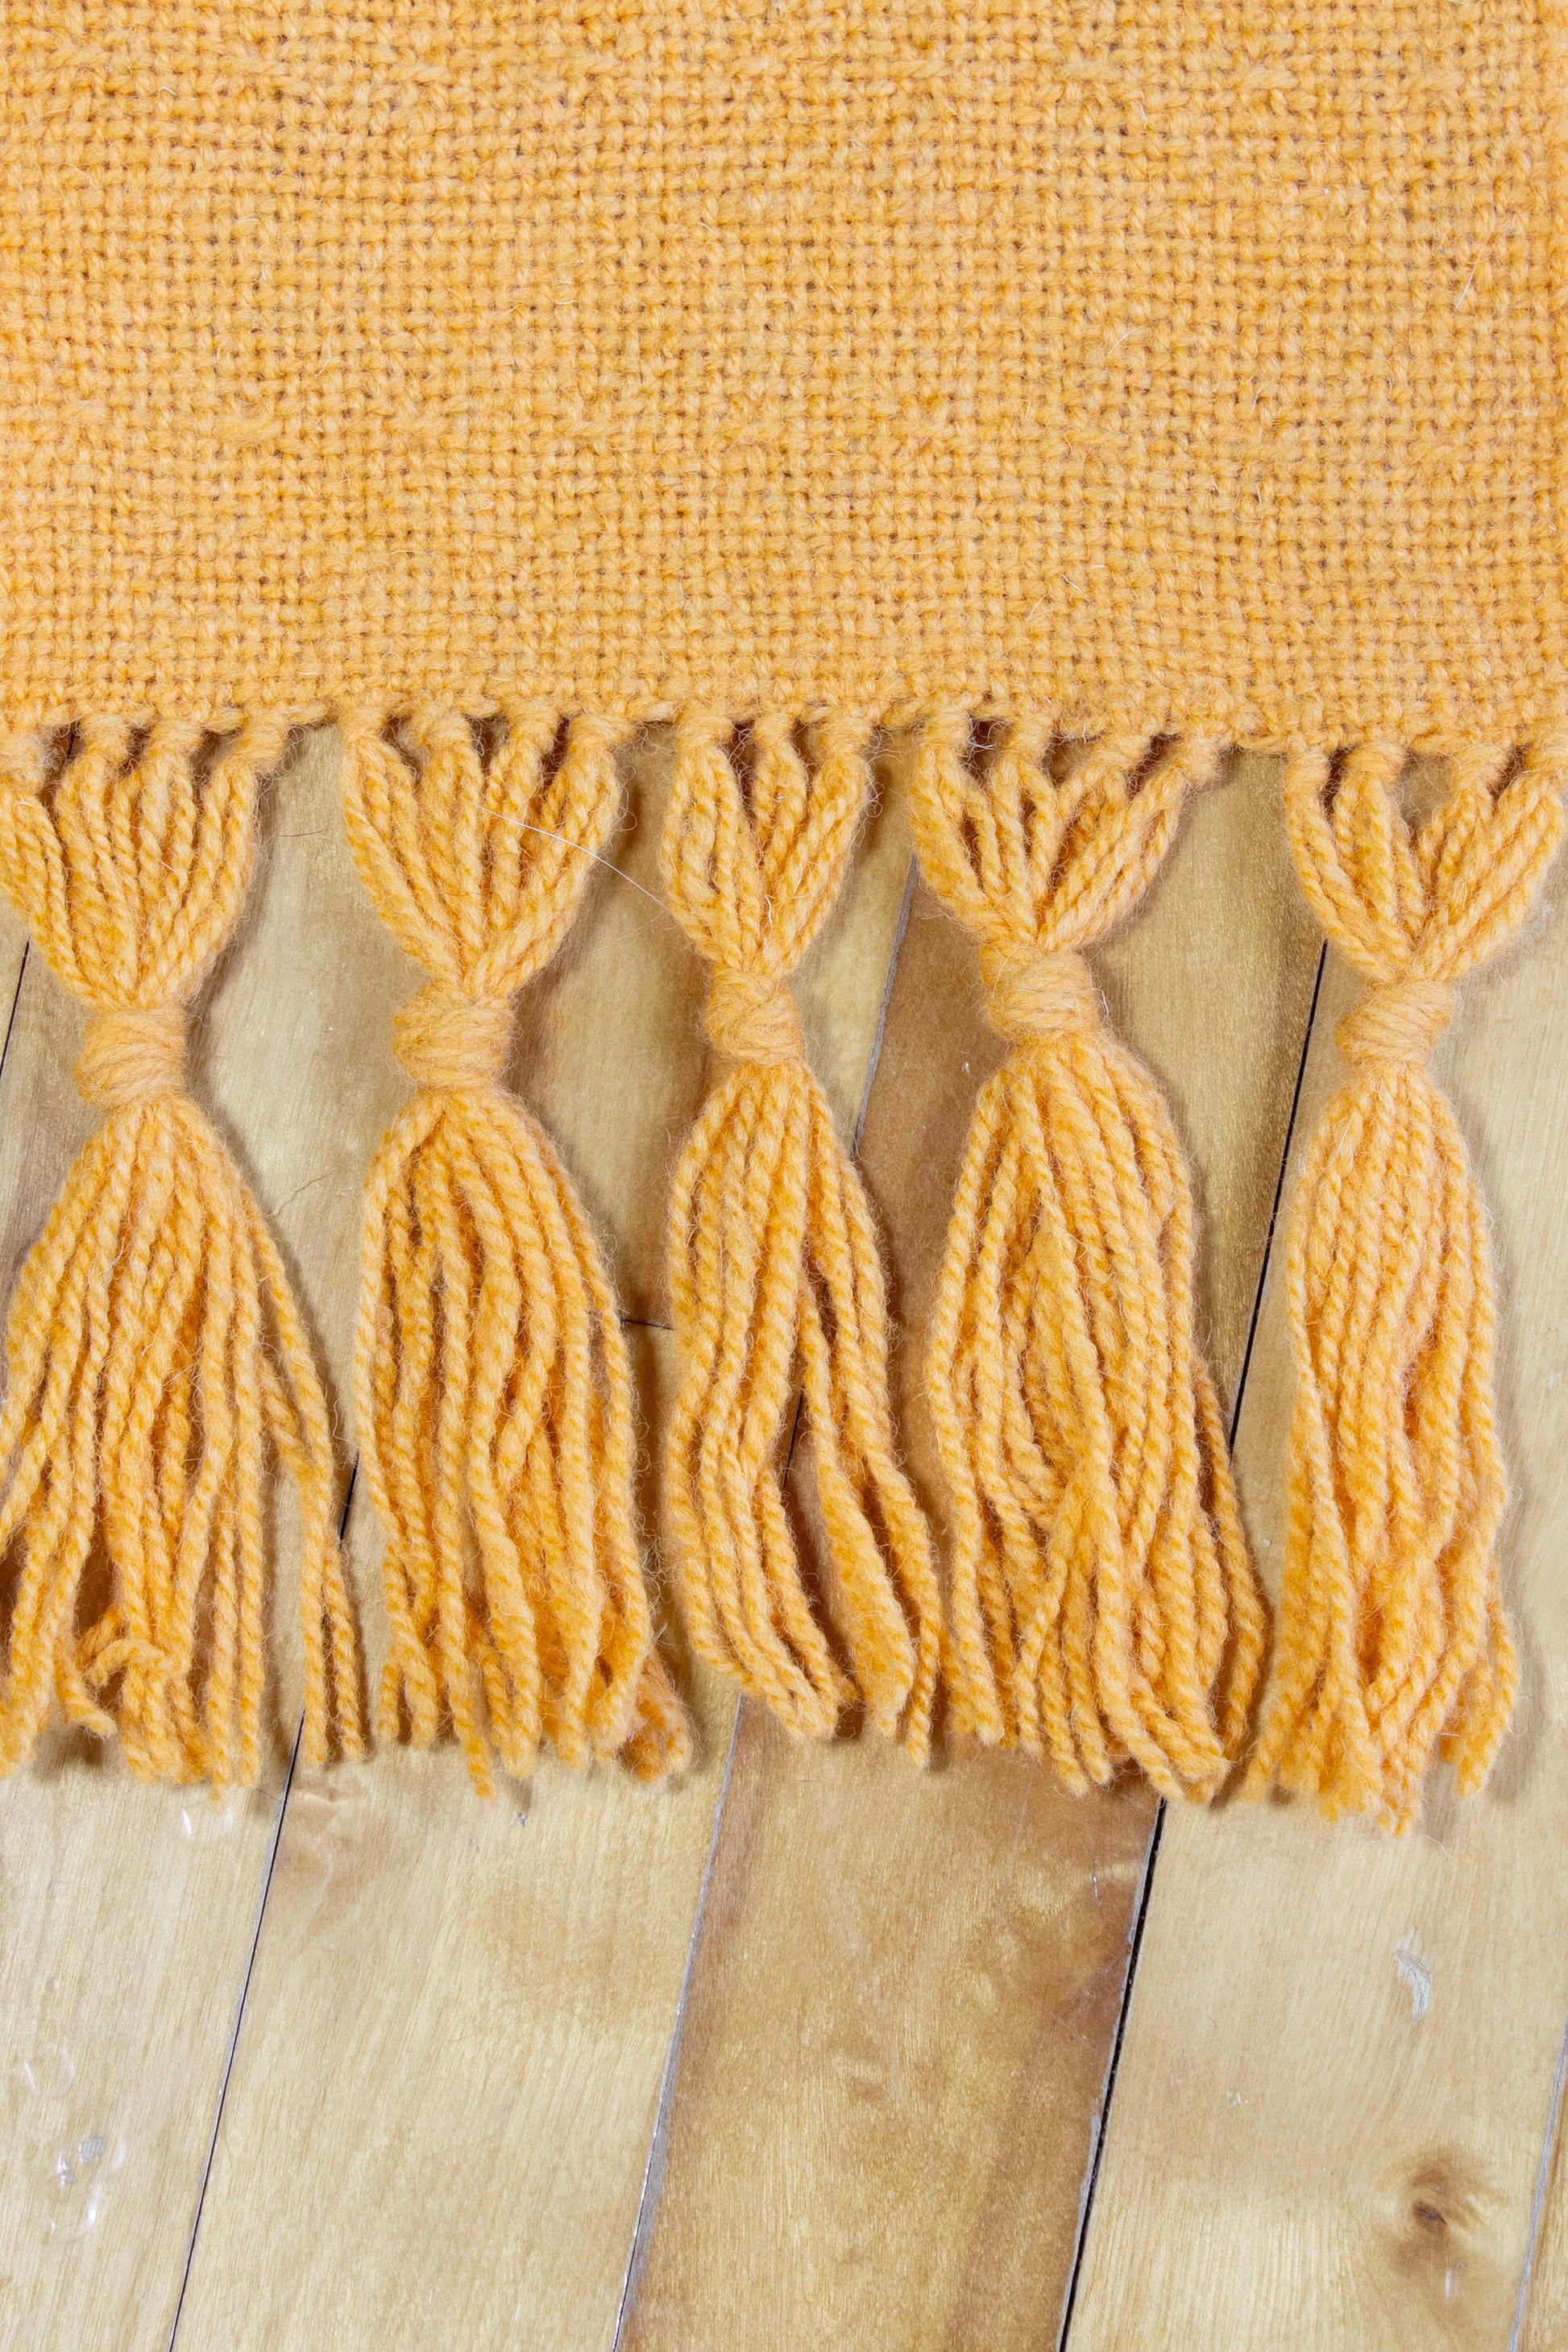 Wool scarf, textured orange, handmade, natural fibres, virgin wool, made in Canada